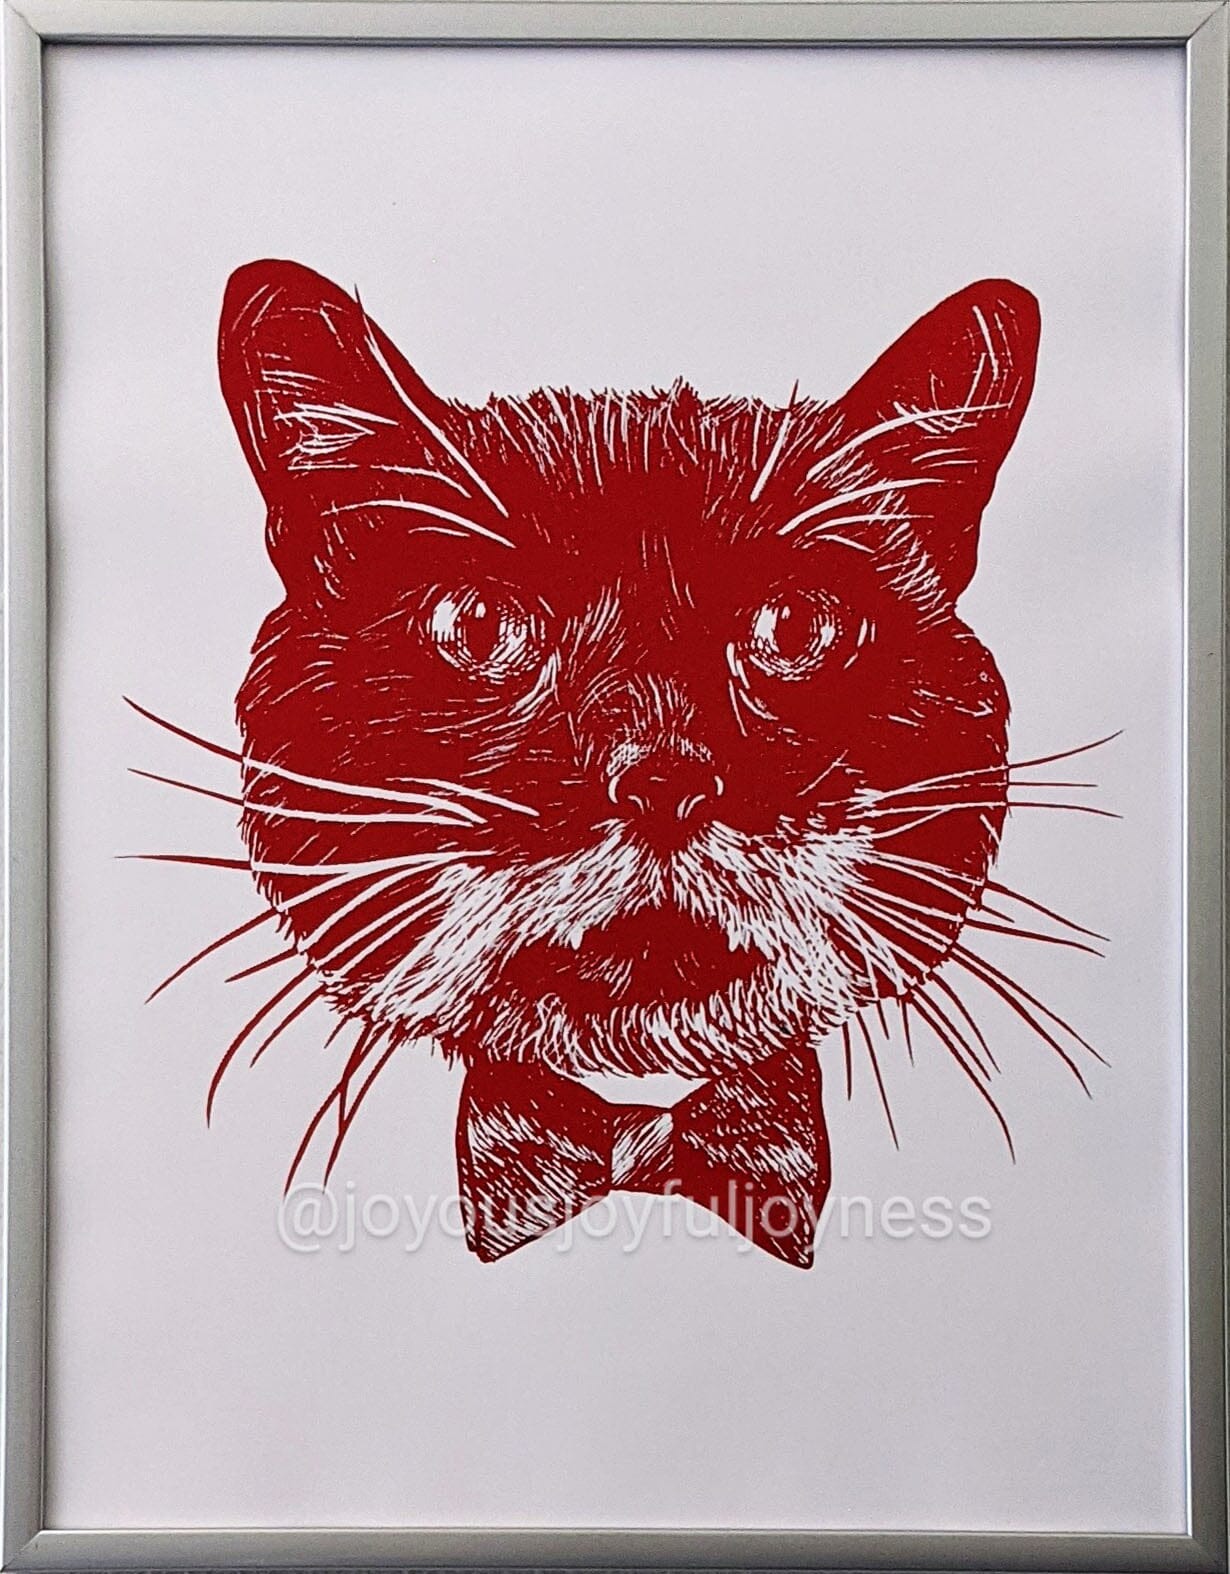 Portfolio: Jagers T. Cat (Not for sale) Posters, Prints, & Visual Artwork JoyousJoyfulJoyness 